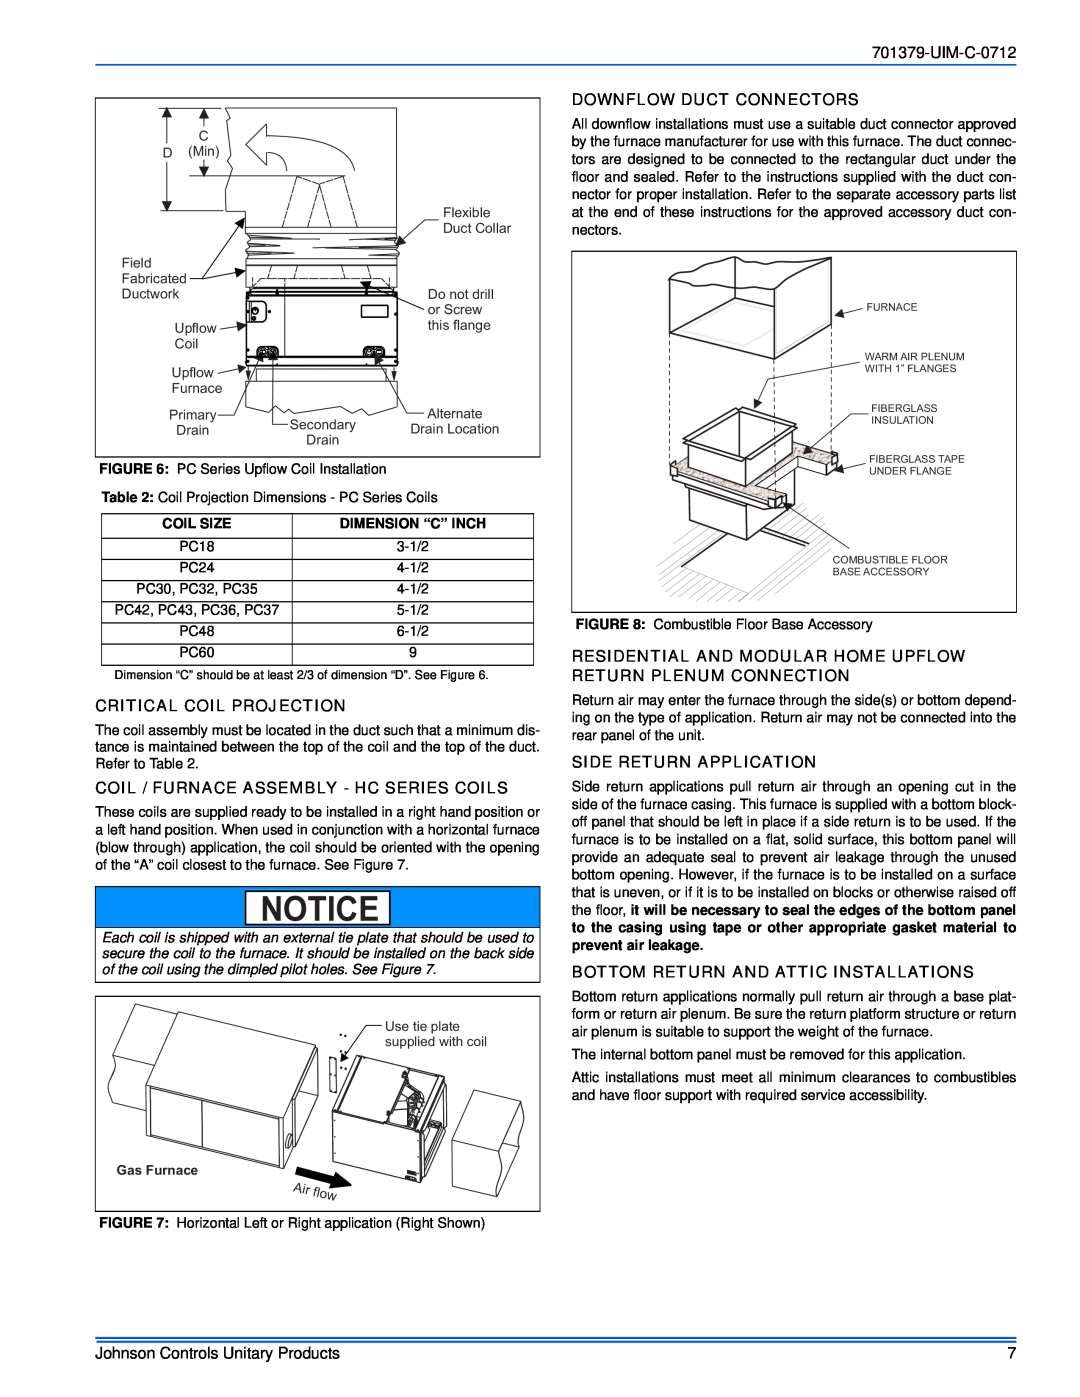 Johnson Controls TM9V*MP UIM-C-0712, Downflow Duct Connectors, Critical Coil Projection, Side Return Application 